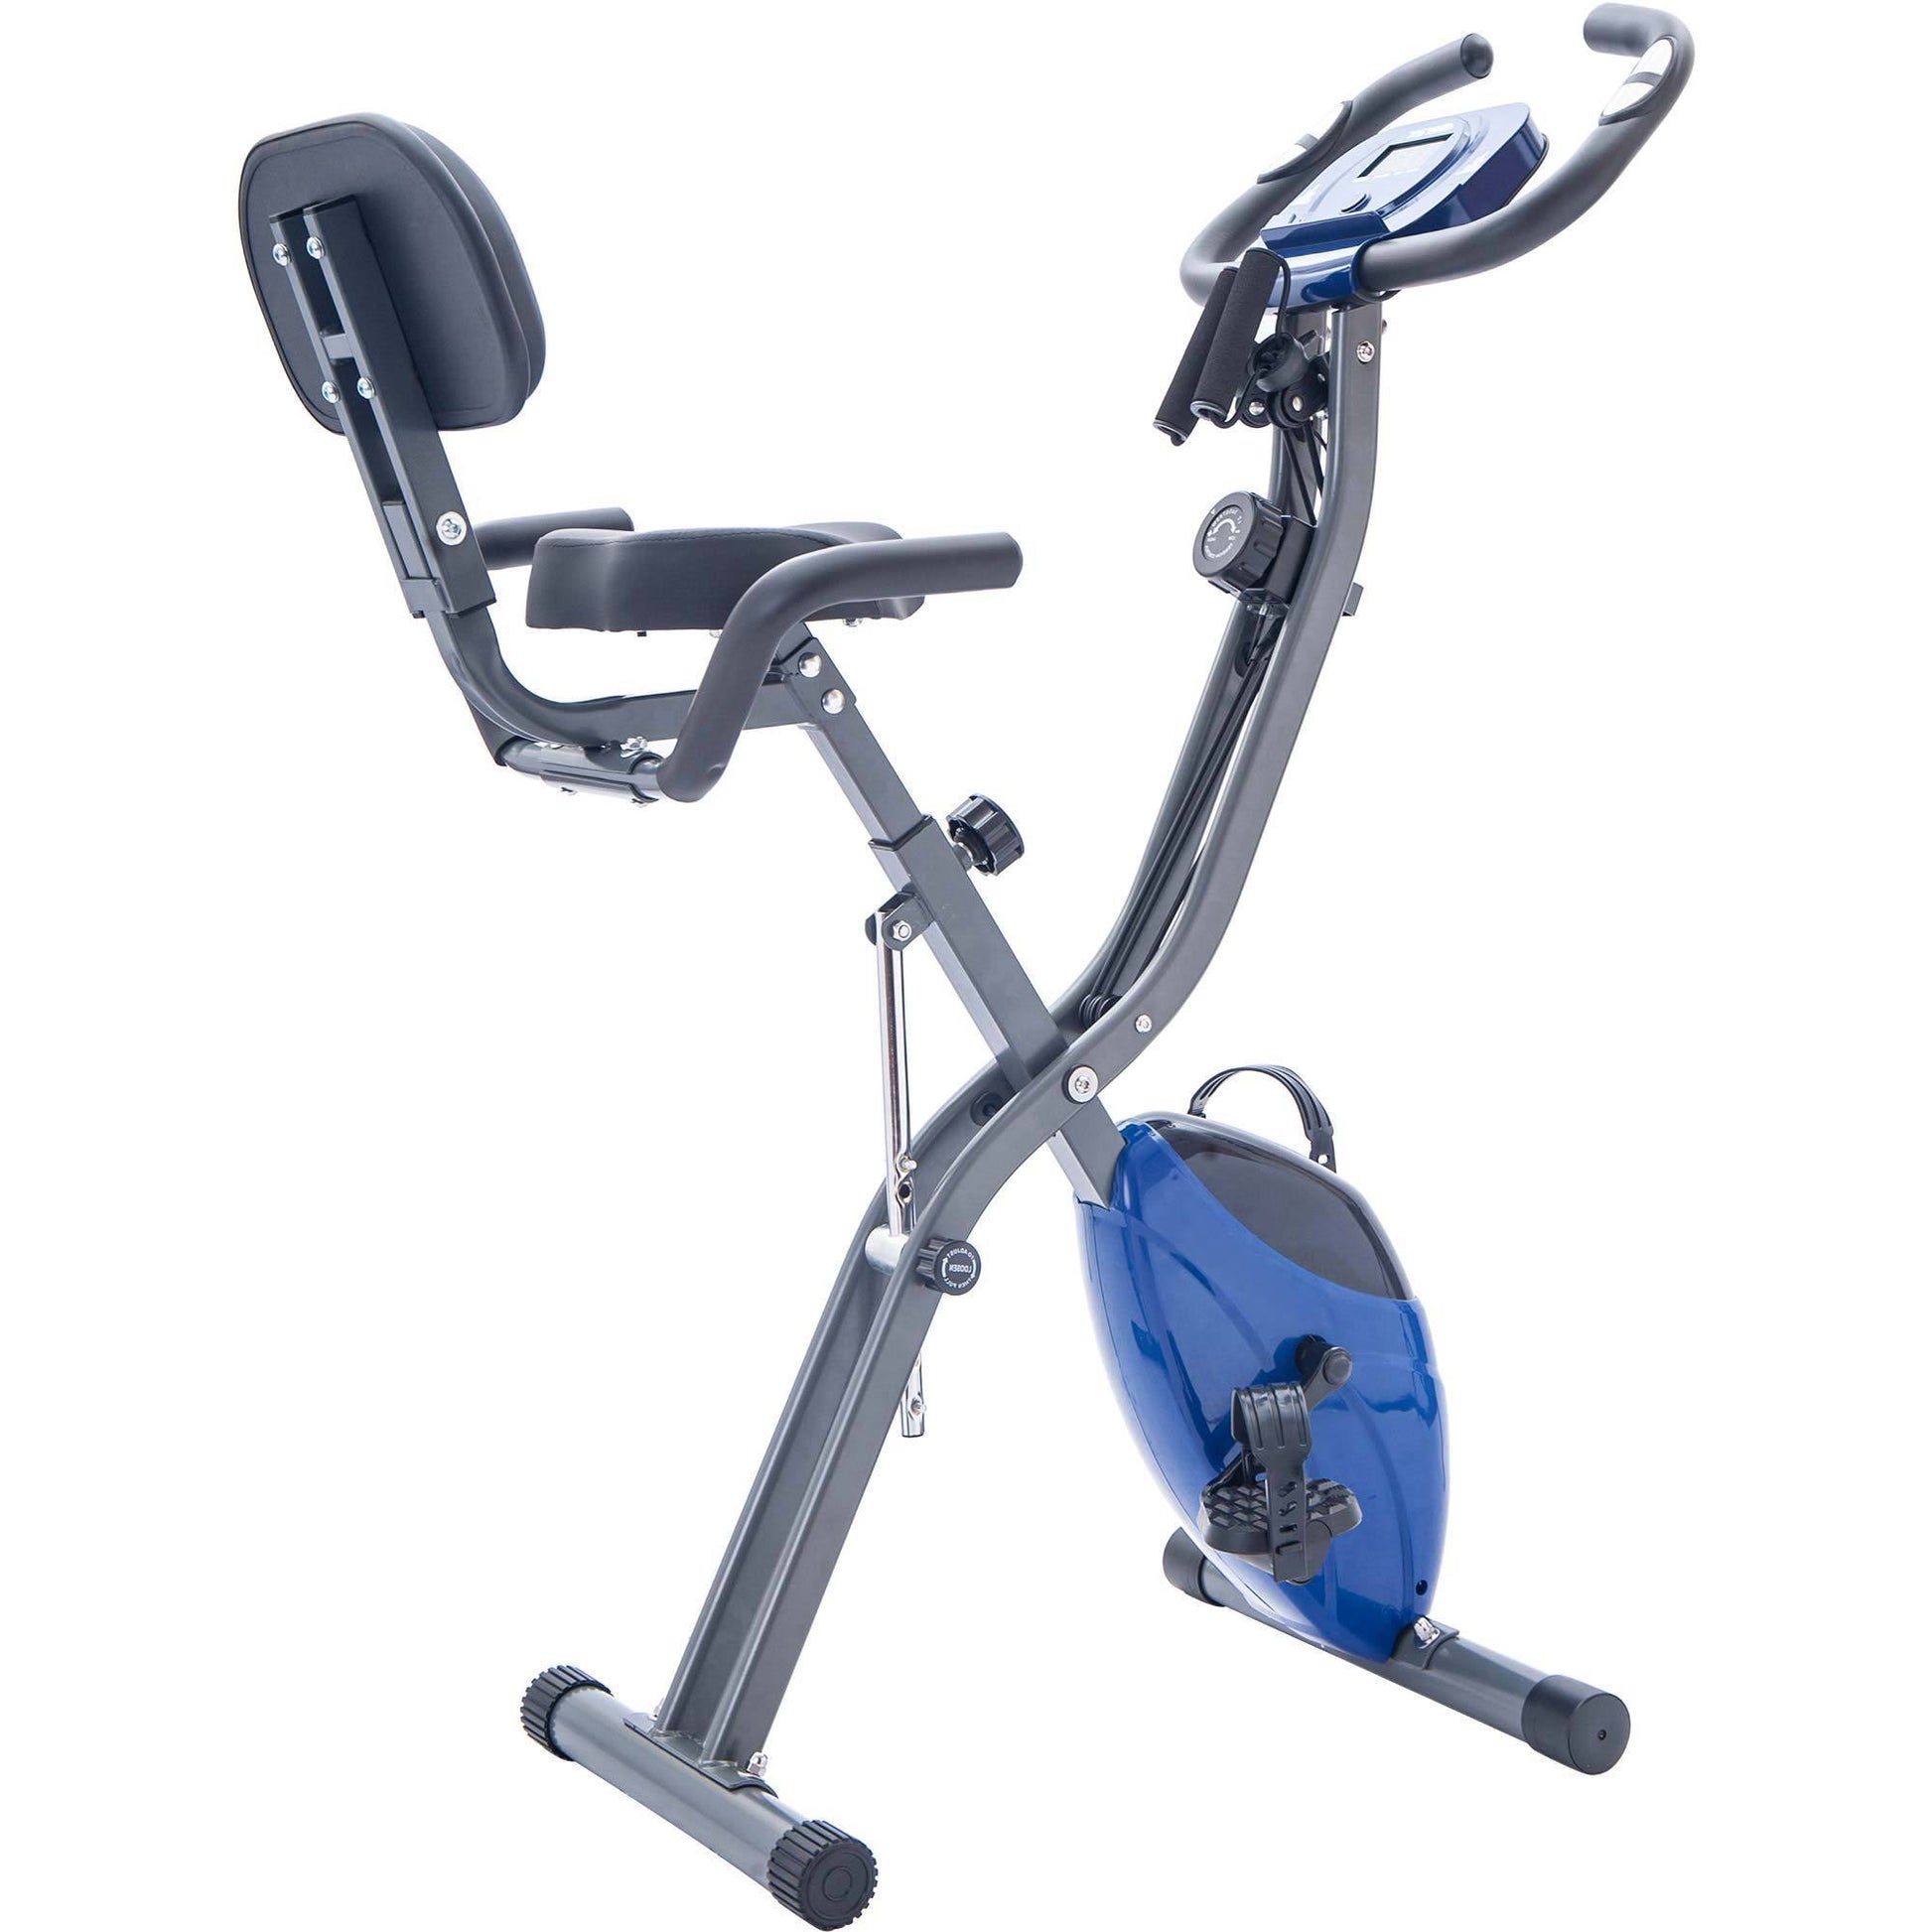 Folding Exercise Bike, Fitness Upright and Recumbent X-Bike with 10-Level Adjustable Resistance, Arm Bands and Backrest MLNshops